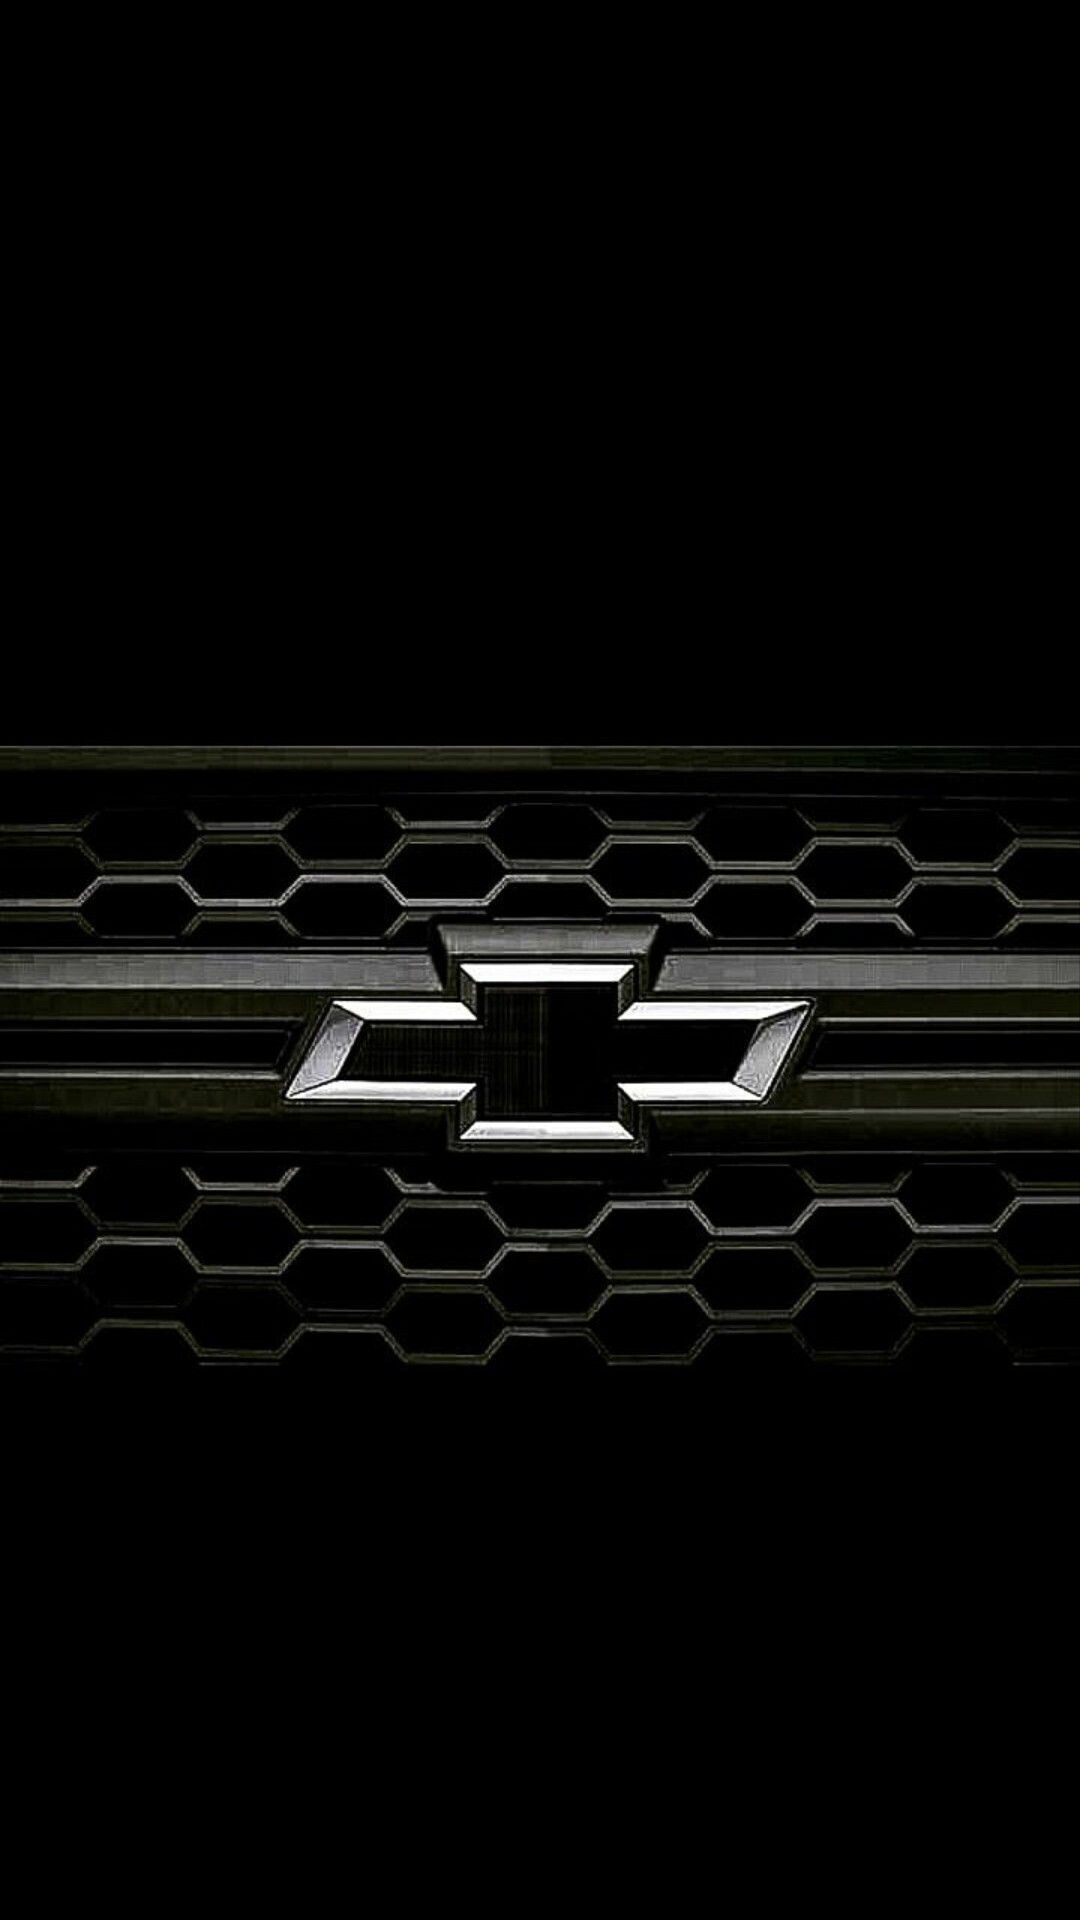 Chevrolet: Grille, Bowtie logo, American car manufacturer. 1080x1920 Full HD Wallpaper.